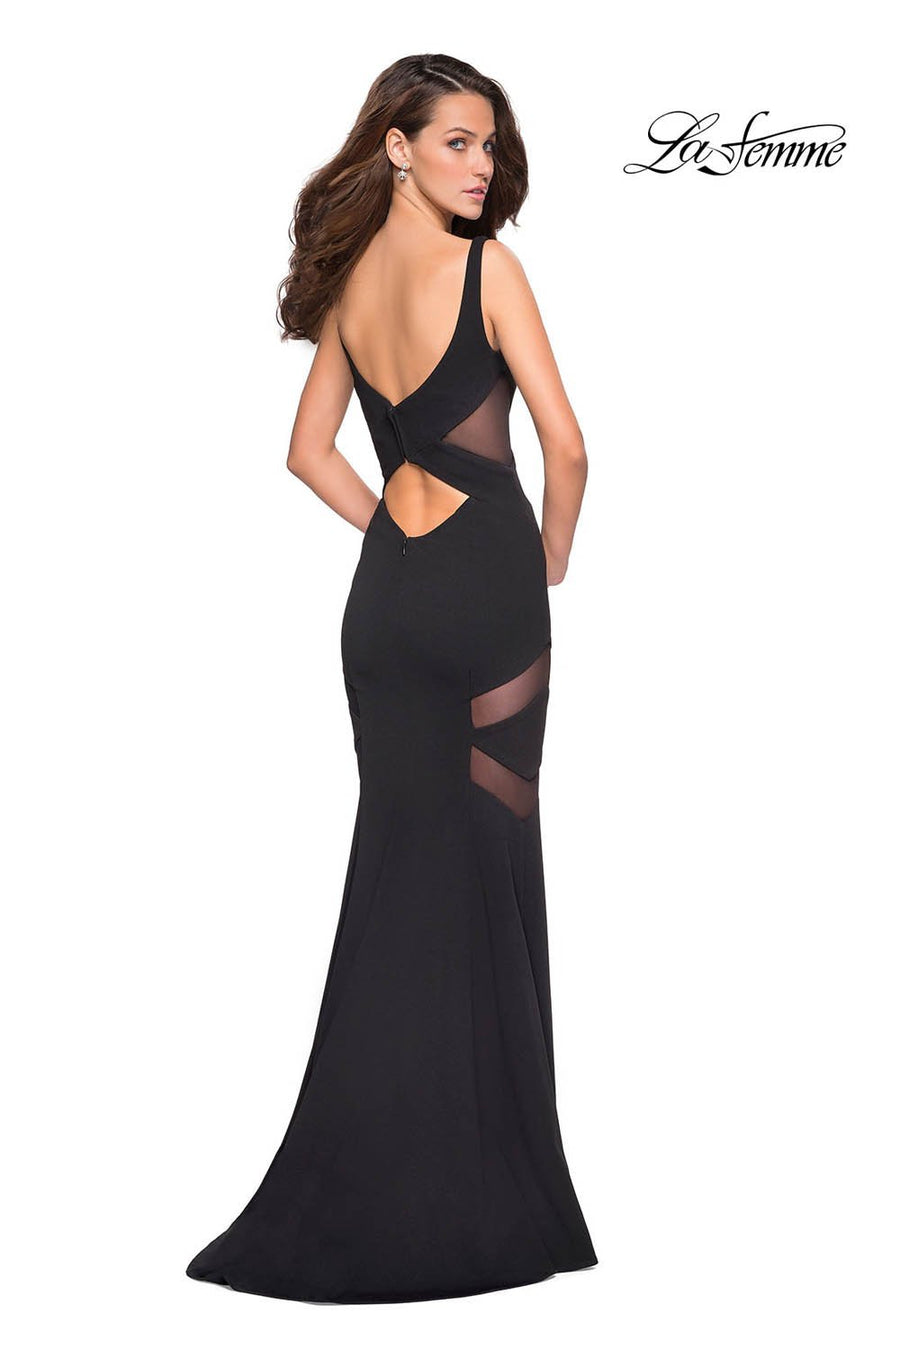 La Femme 27104 prom dress images.  La Femme 27104 is available in these colors: Black.